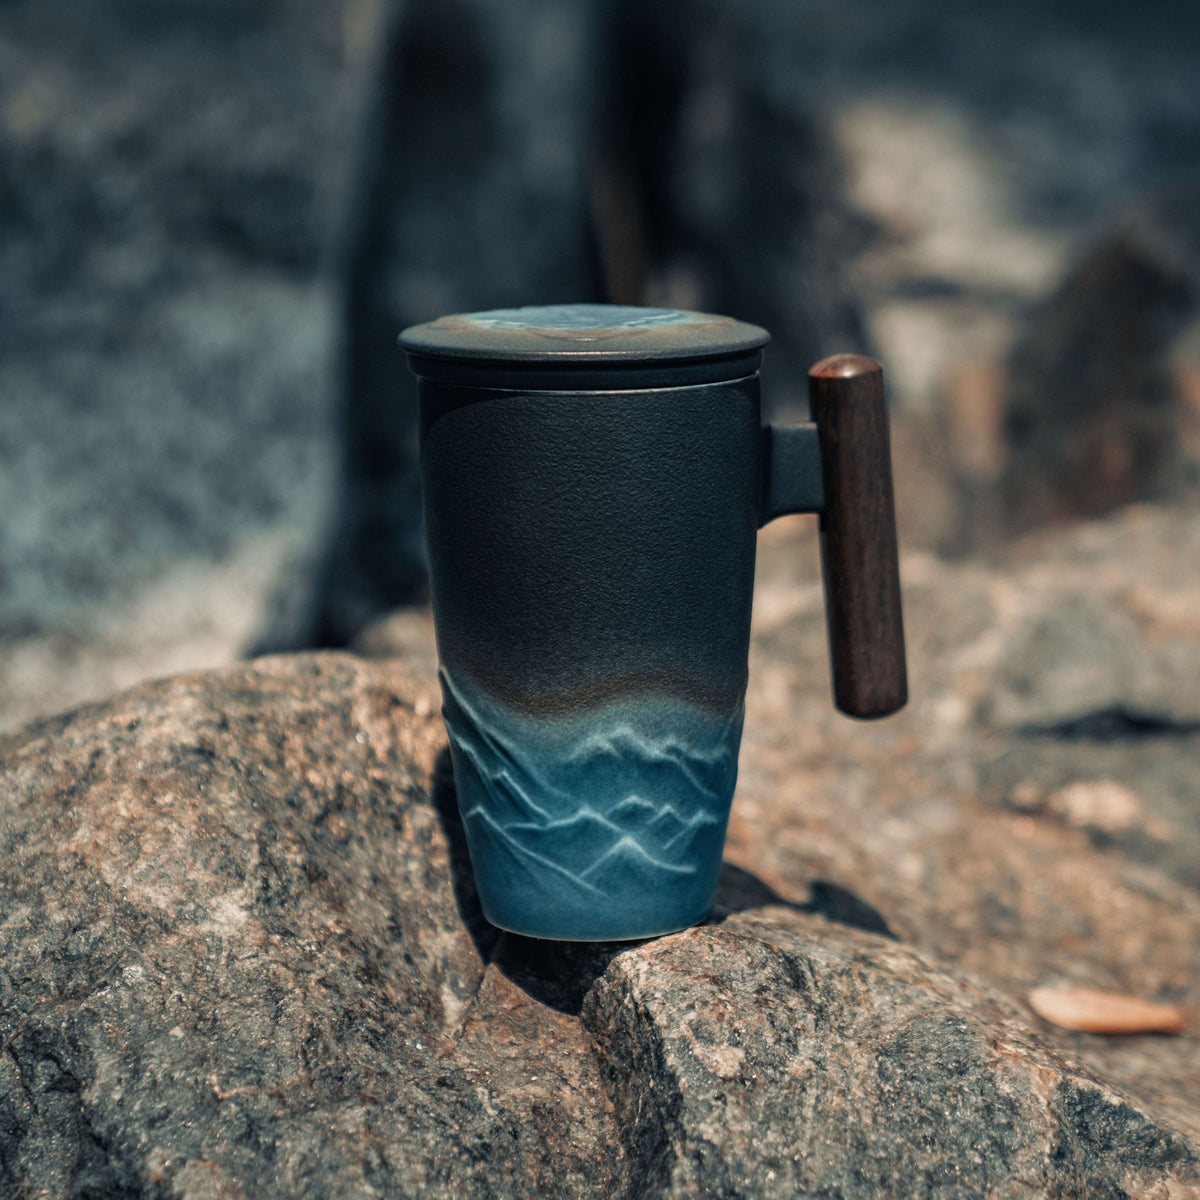 Clay Espresso Cup Set of 4, 6, 10 | Multi use Vessel